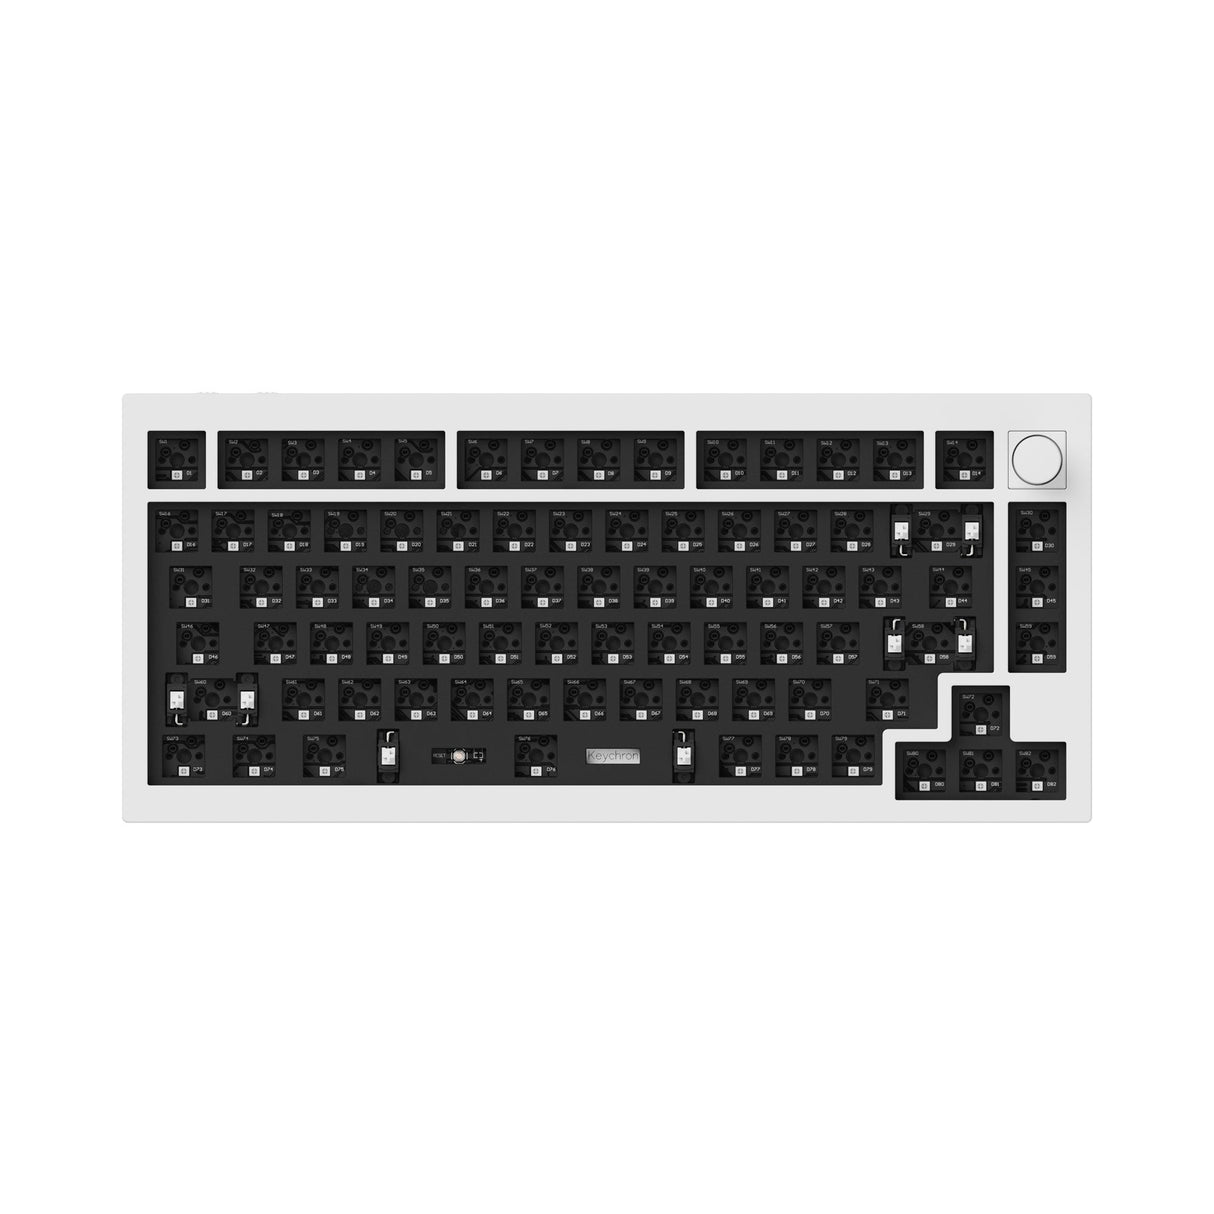 Keychron Q1 Pro QMK/VIA wireless custom mechanical keyboard knob 75% layout full aluminum white frame for Mac Windows Linux barebone